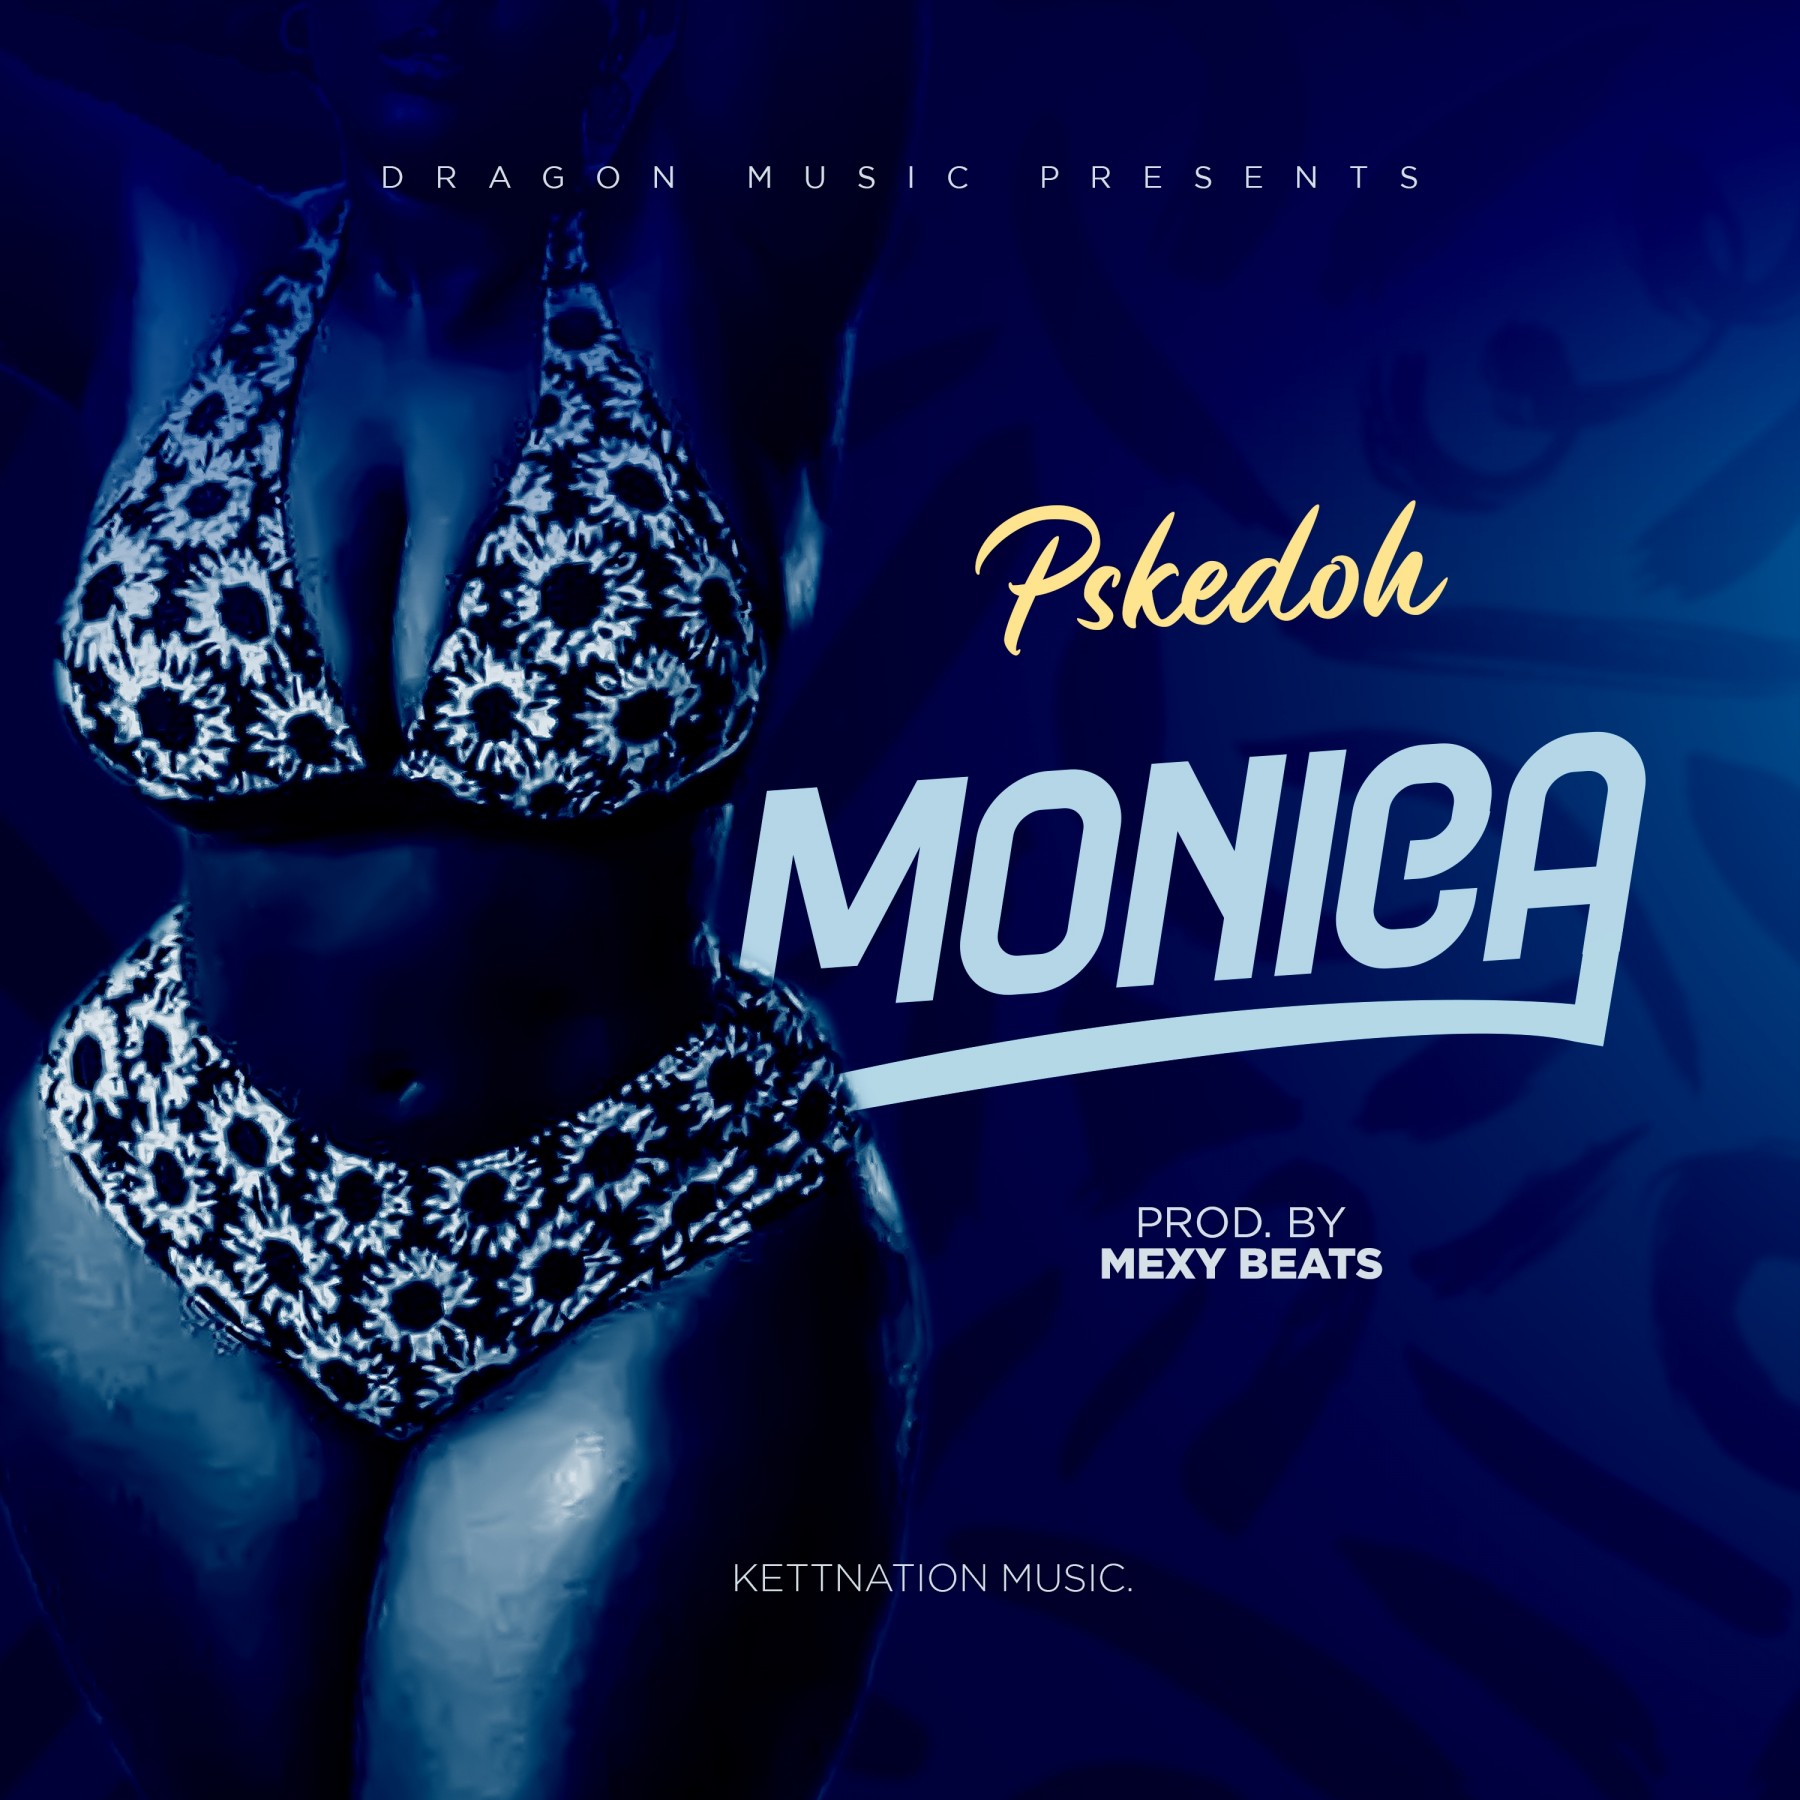 Pskedoh-Monika-prod-by-mexy-beats